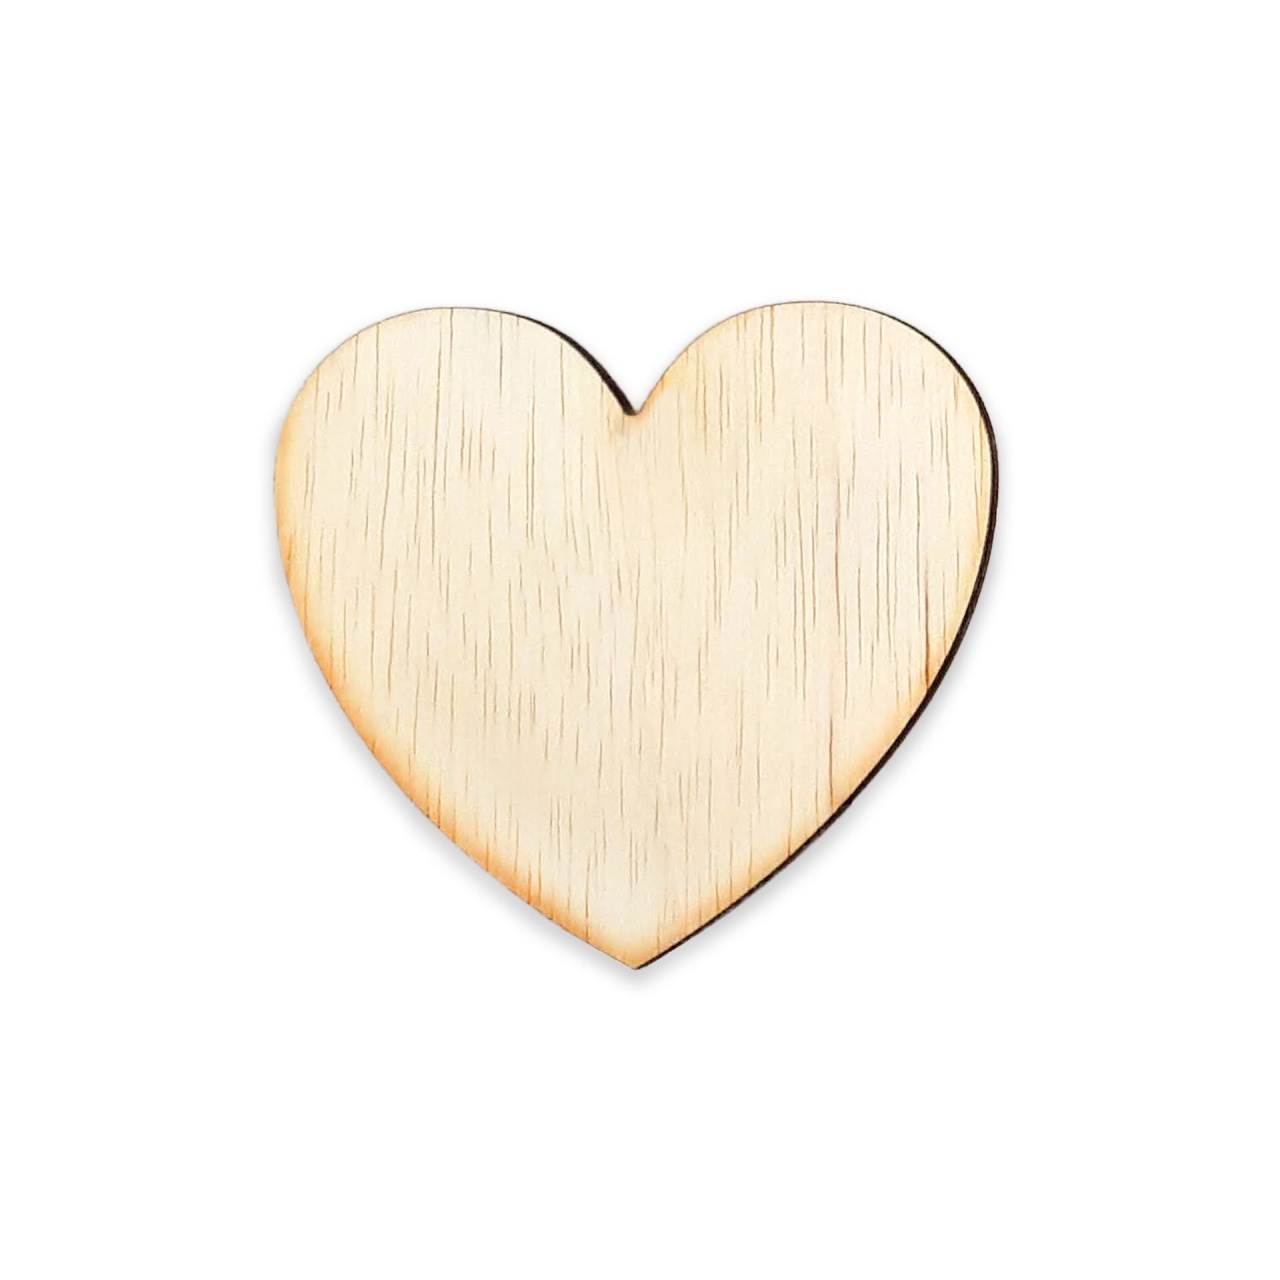 Inimă, 5×4,5 cm, placaj :: 5×4,5 cm